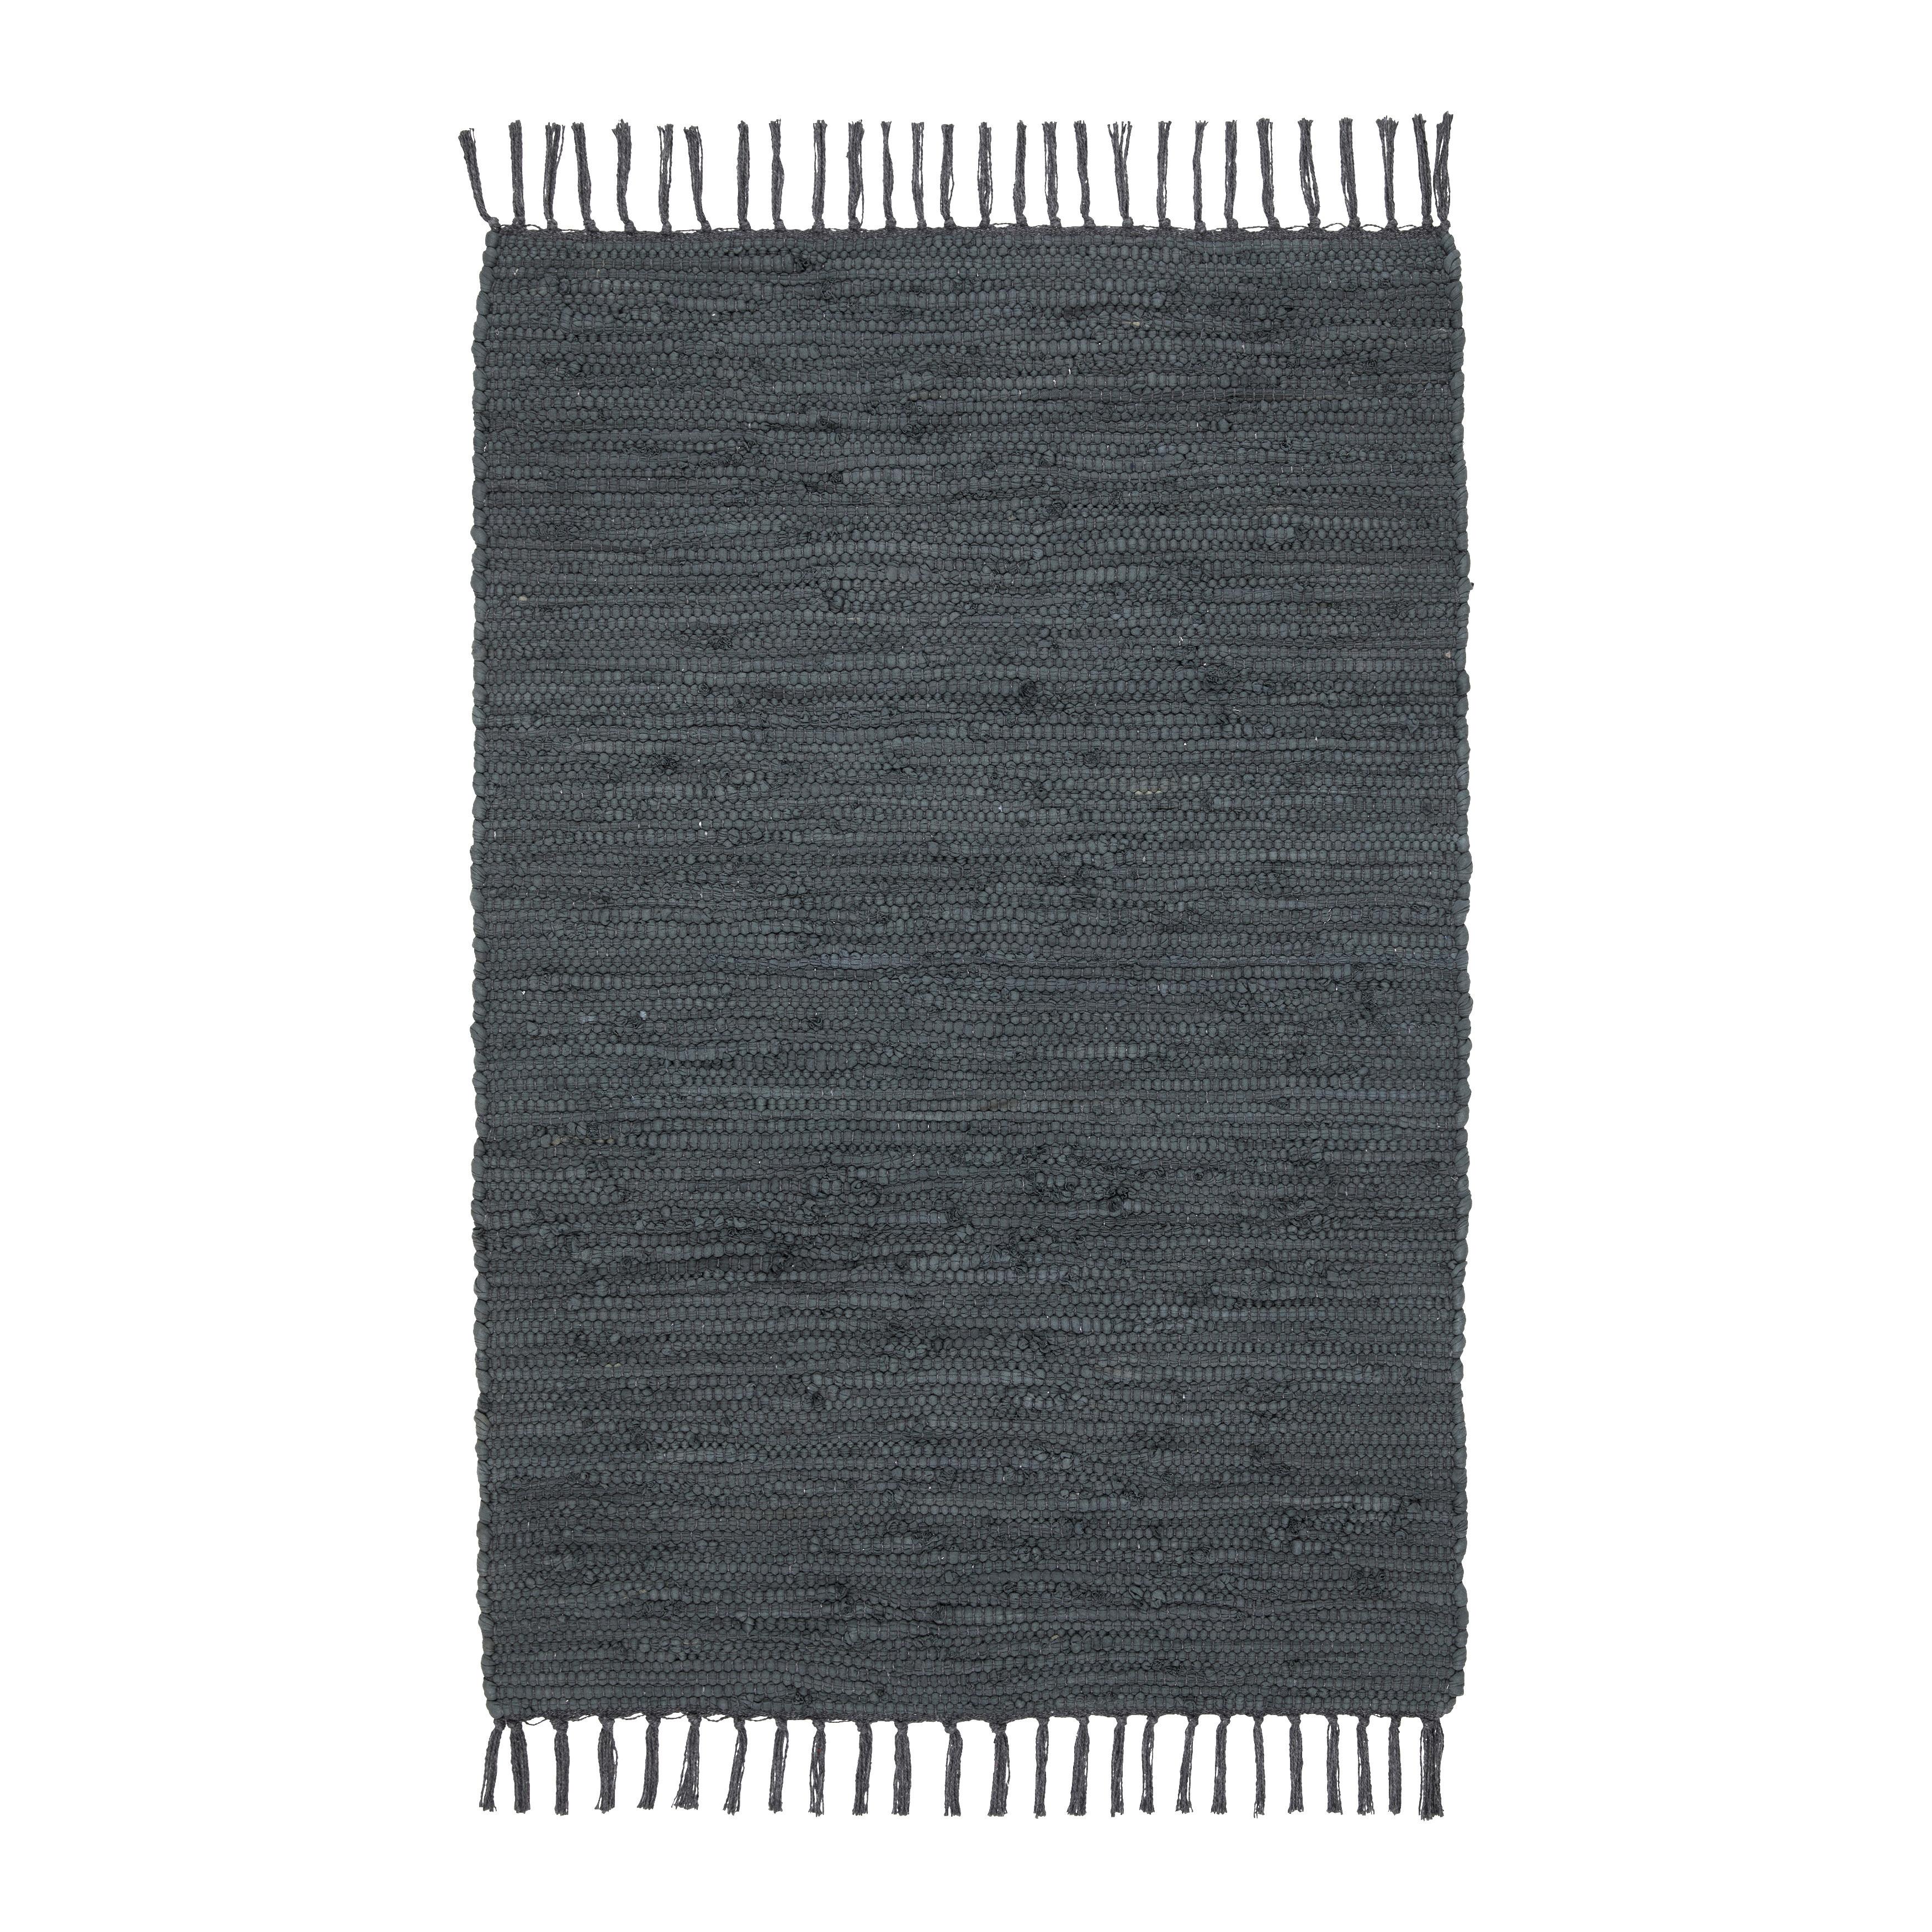 Hadrový Koberec Julia 1, Š/d: 60/90cm - tmavě šedá, Romantický / Rustikální, textil (60/90cm) - Modern Living